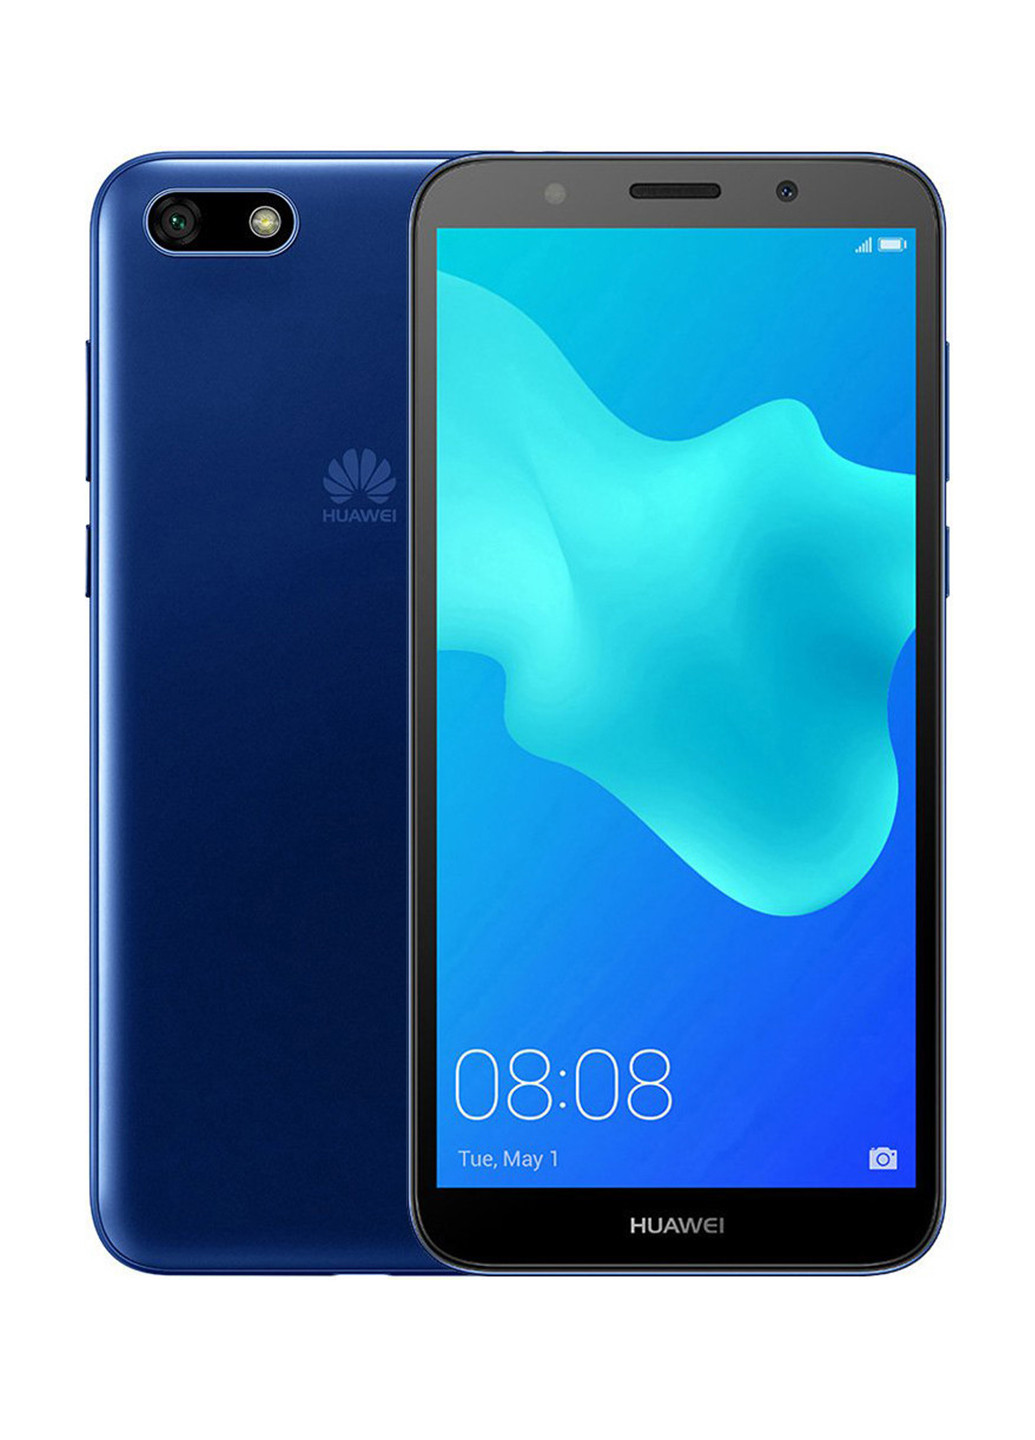 Смартфон Huawei y5 2018 2/16 blue (dra-l21) (163174115)